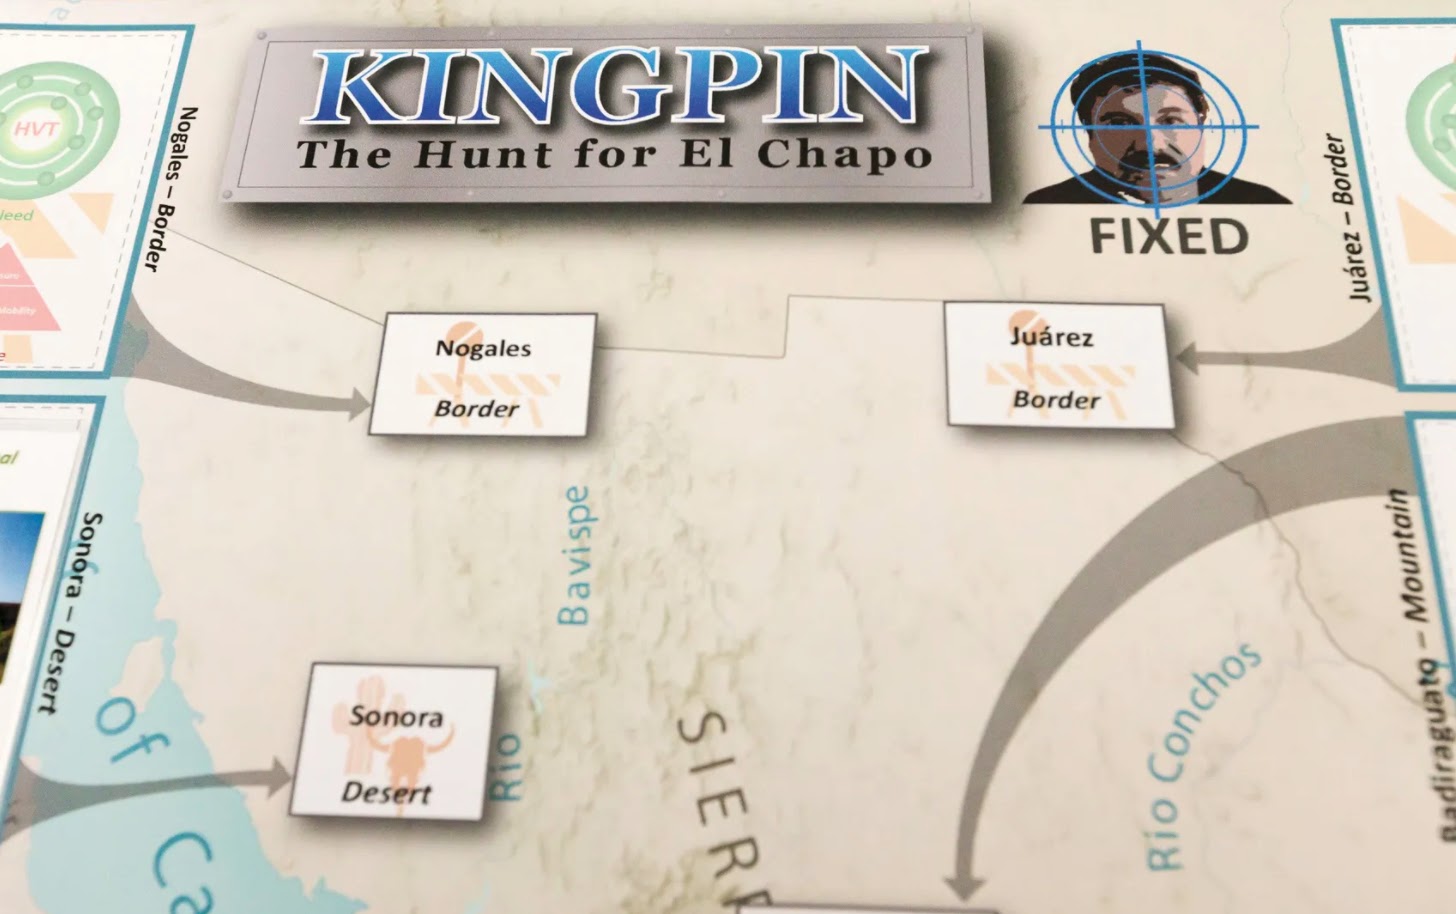 The CIA's Kingpin, The Hung for El Chapo